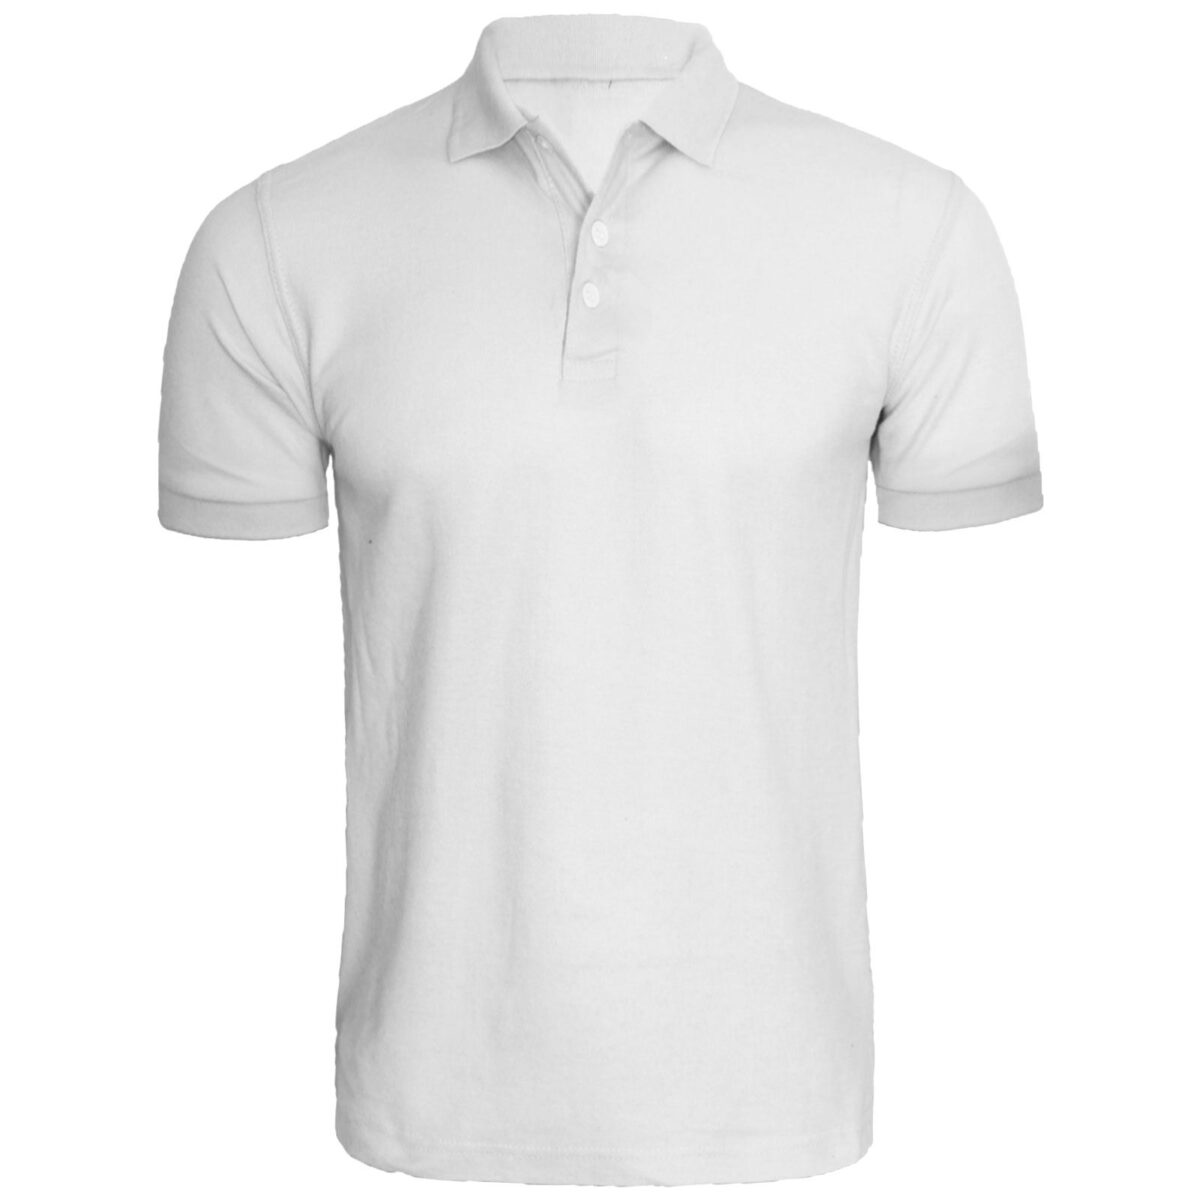 Wholesale Men Plain White Polo Shirts 1